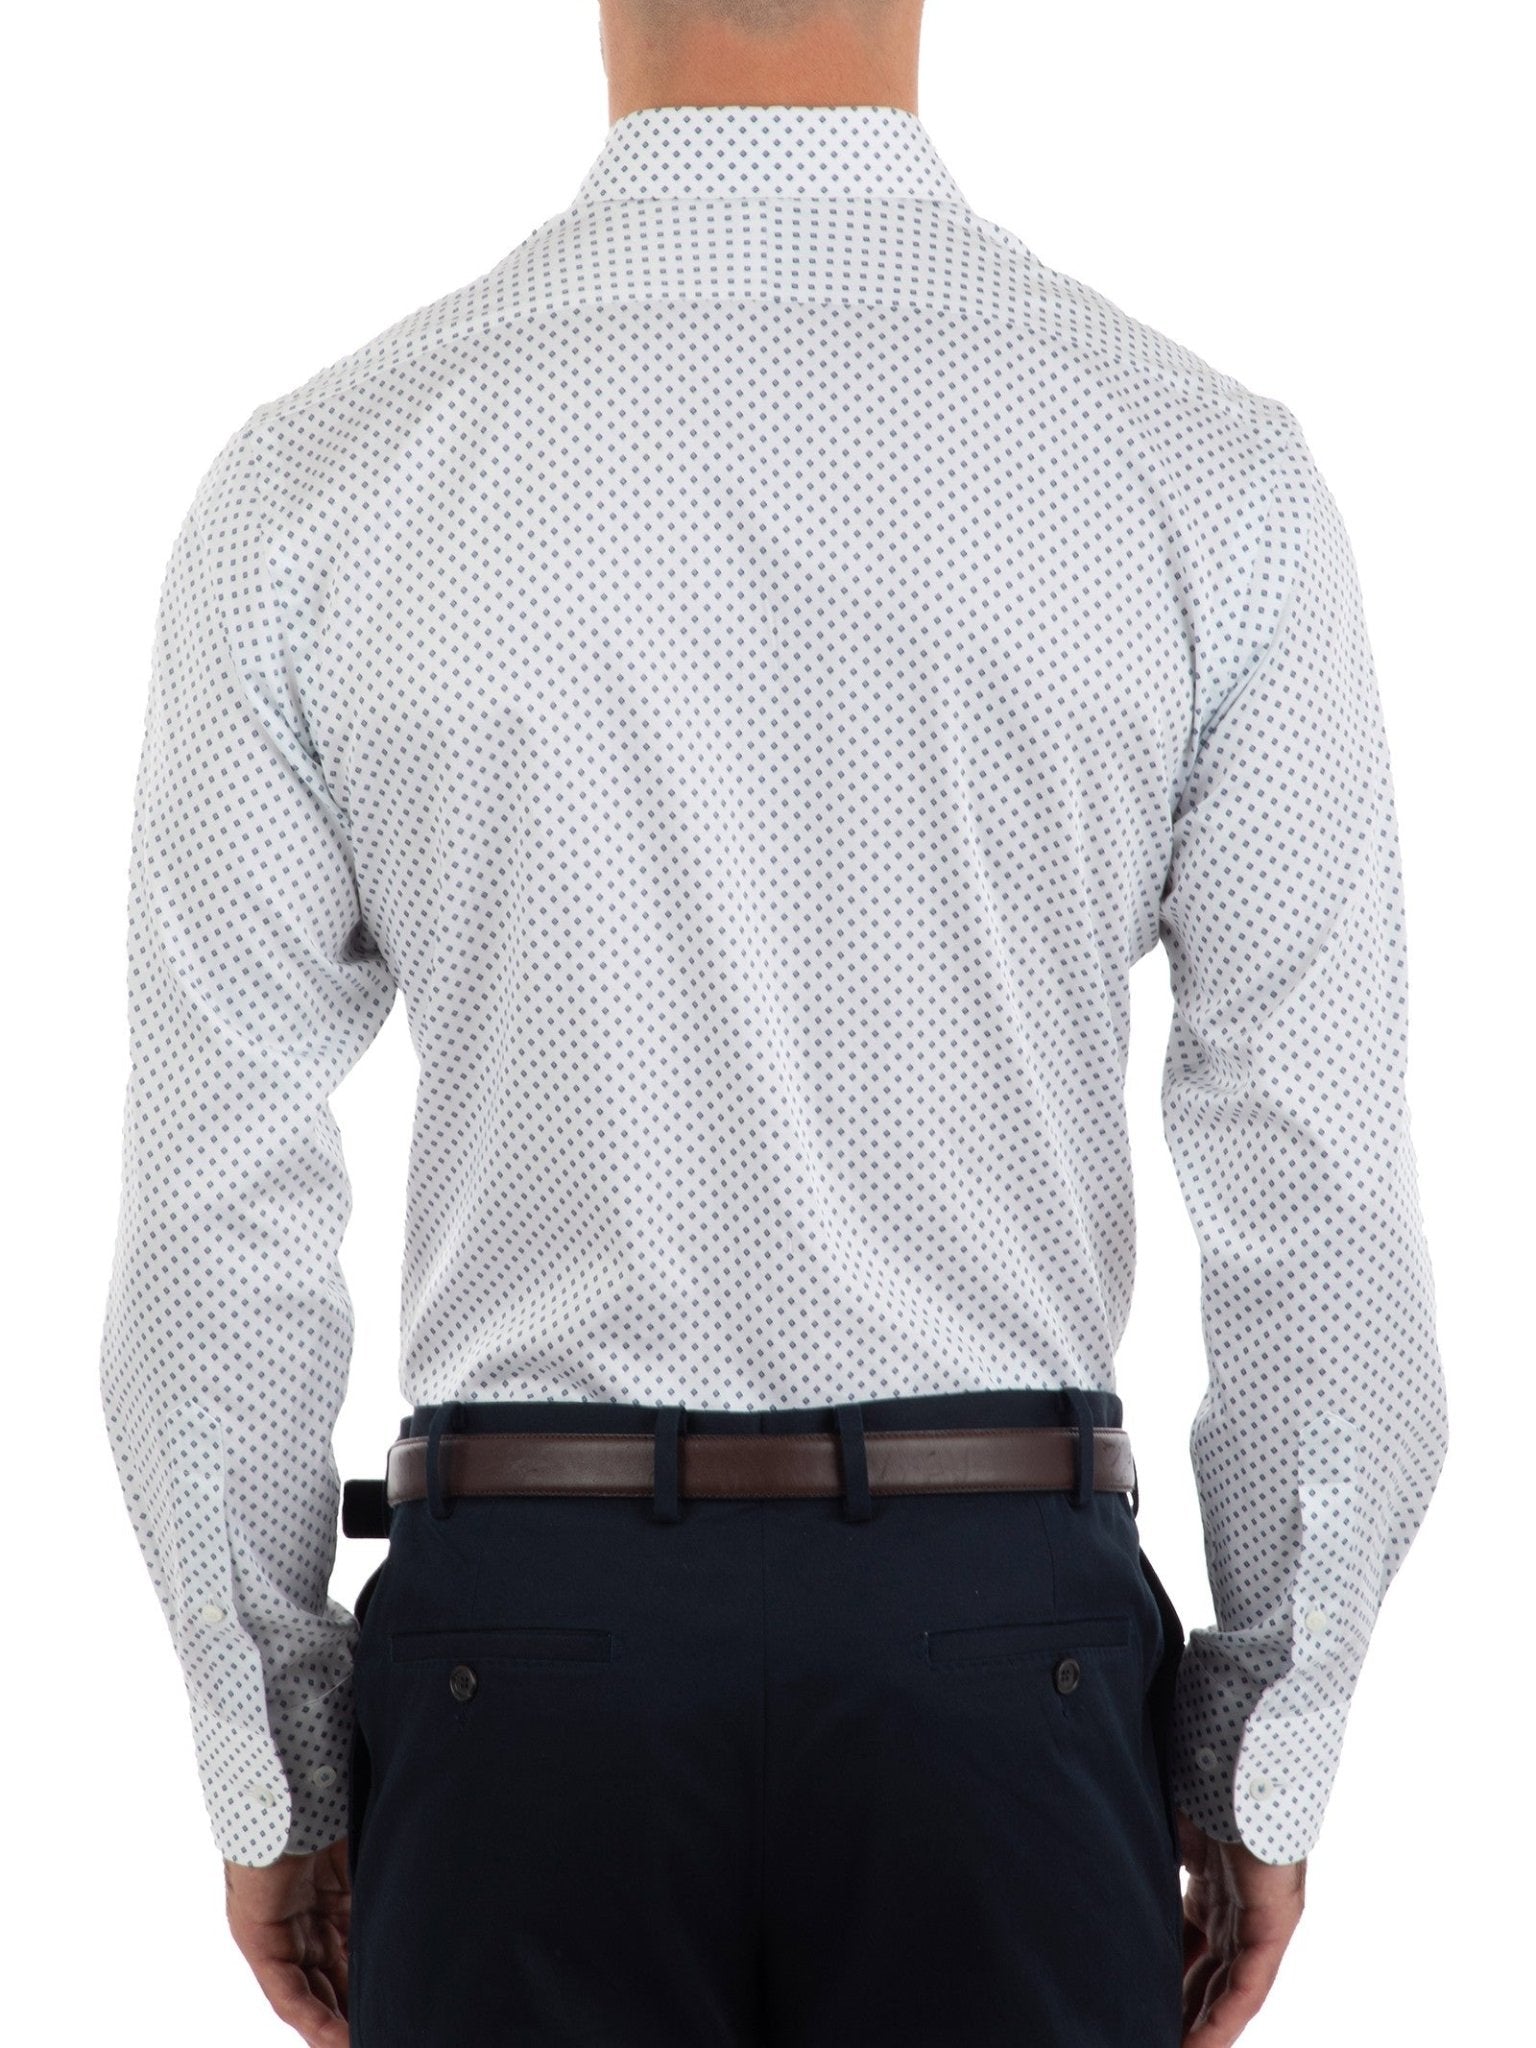 Joe Black FJM896 Pioneer Shirt - Thomson's Suits Ltd - White - 41 - 57974